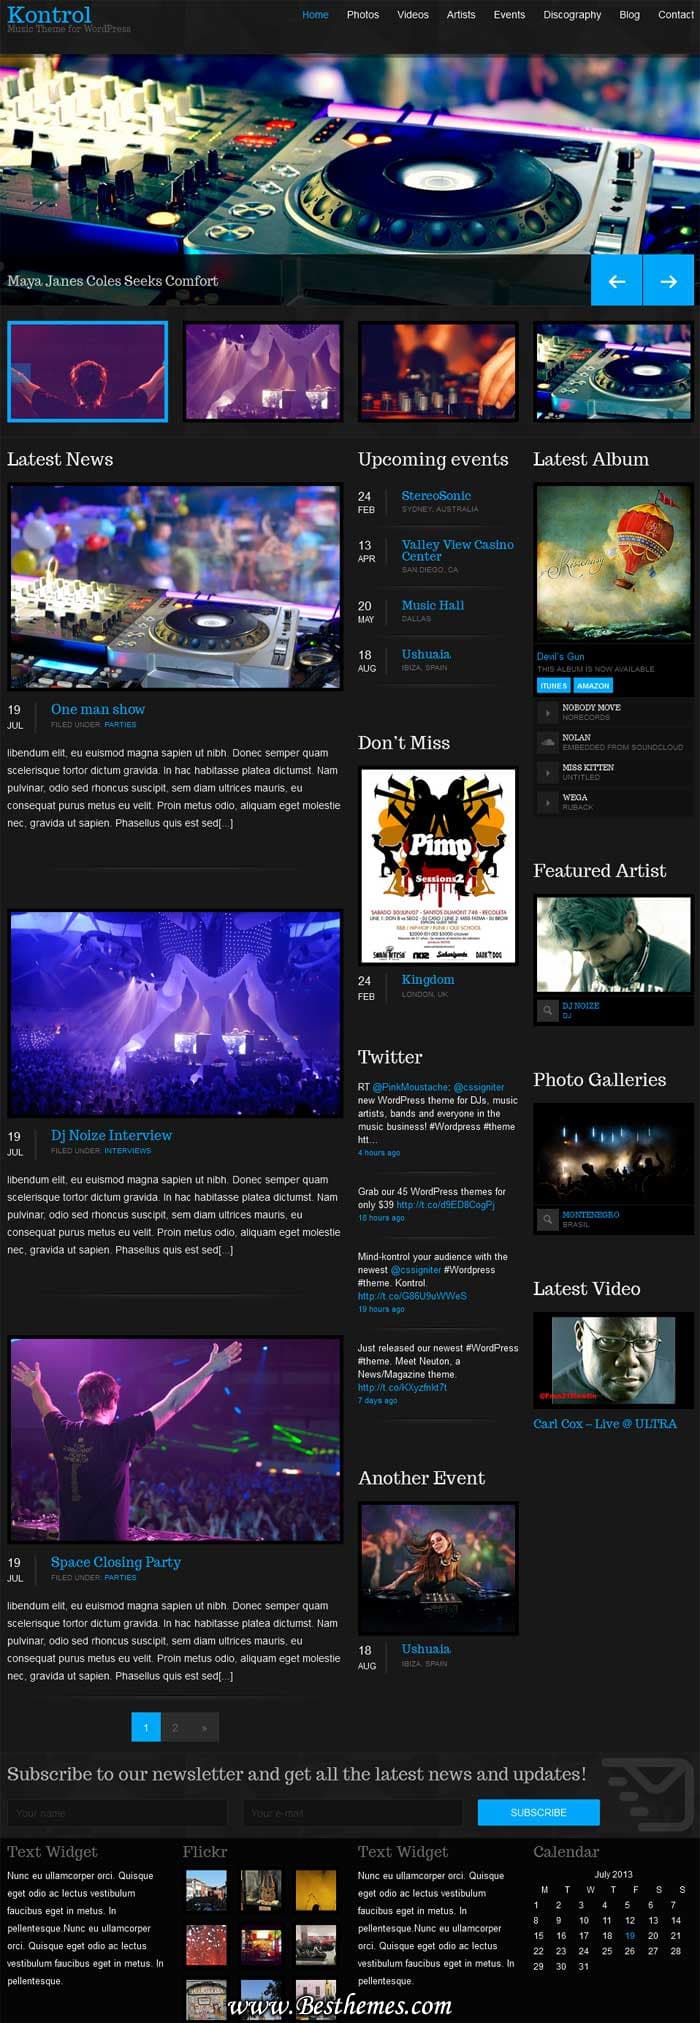 Kontrol WordPress Theme, Best Music WordPress Theme, Responsive DJ WordPress Theme, Best Musician WordPress Theme